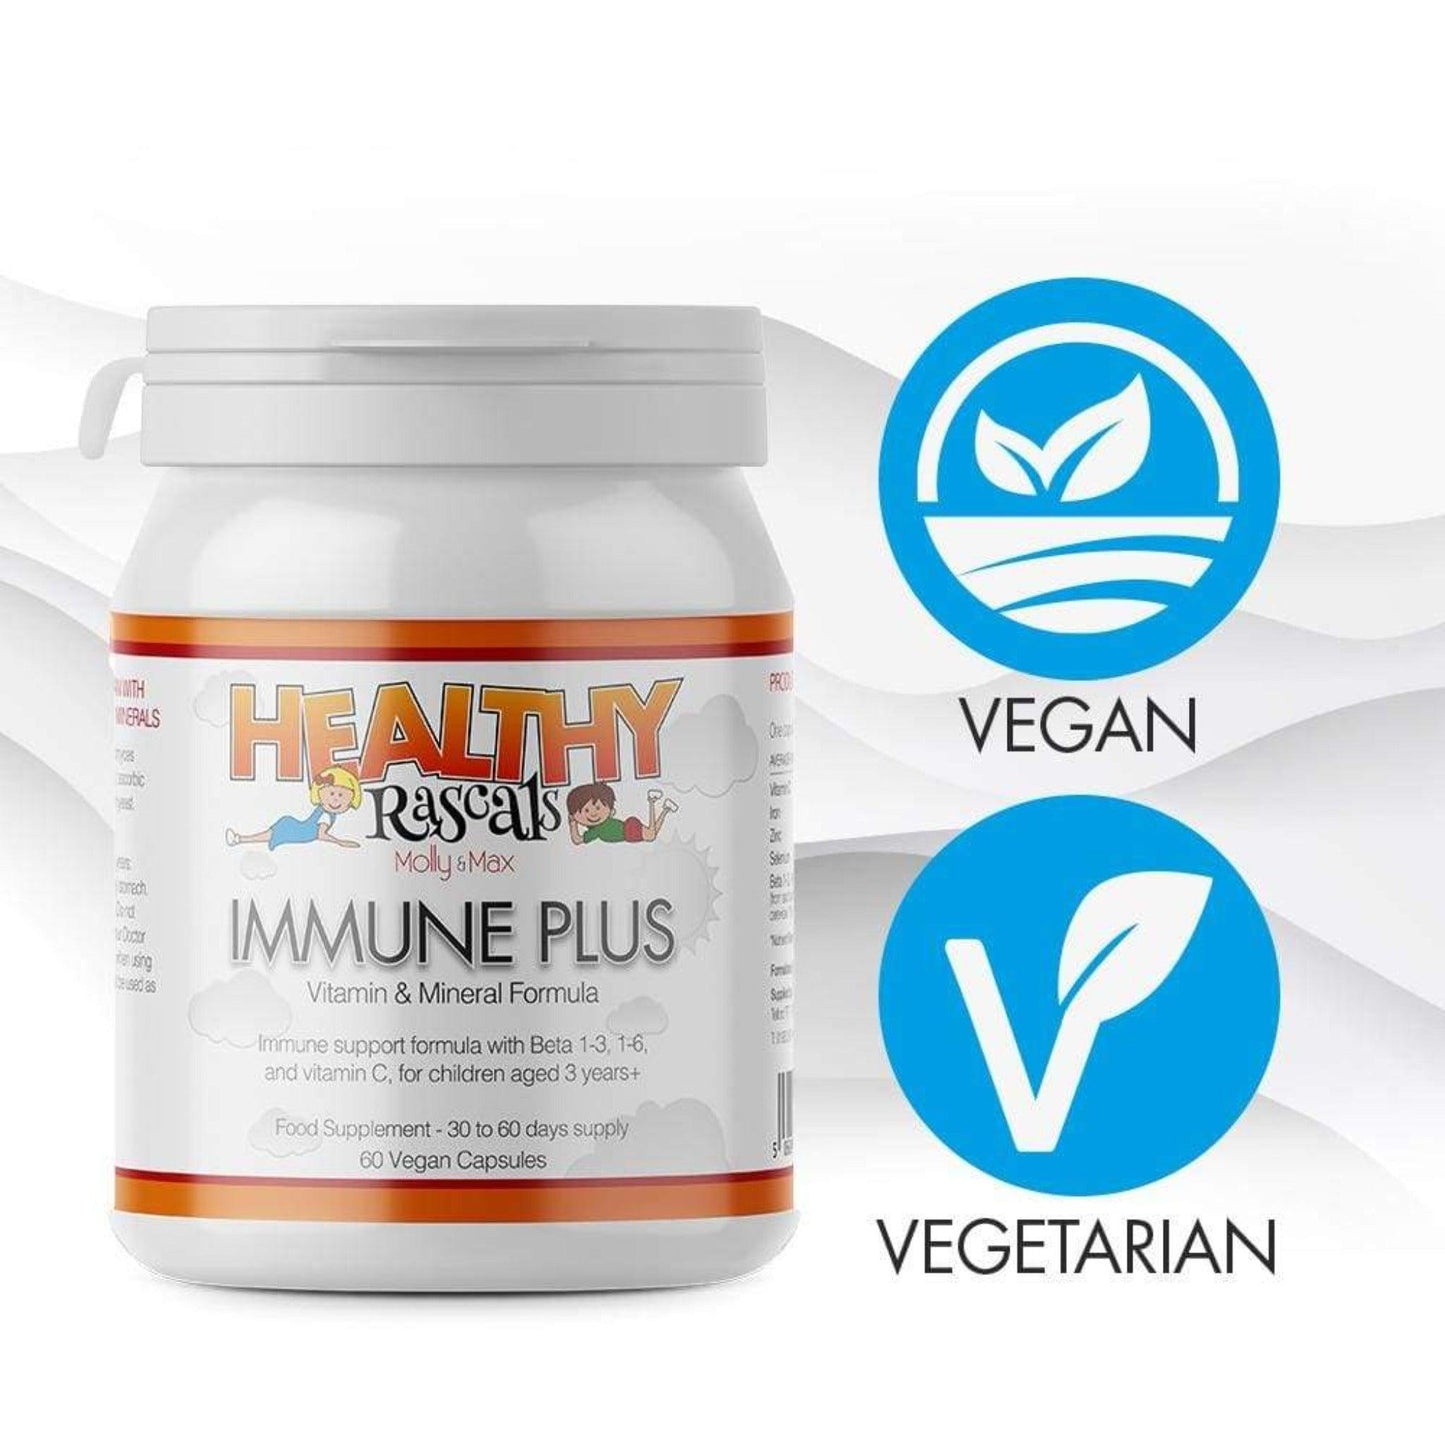 Healthy Rascals Immune Plus, vegan and vegetarian-friendly supplement for kids.